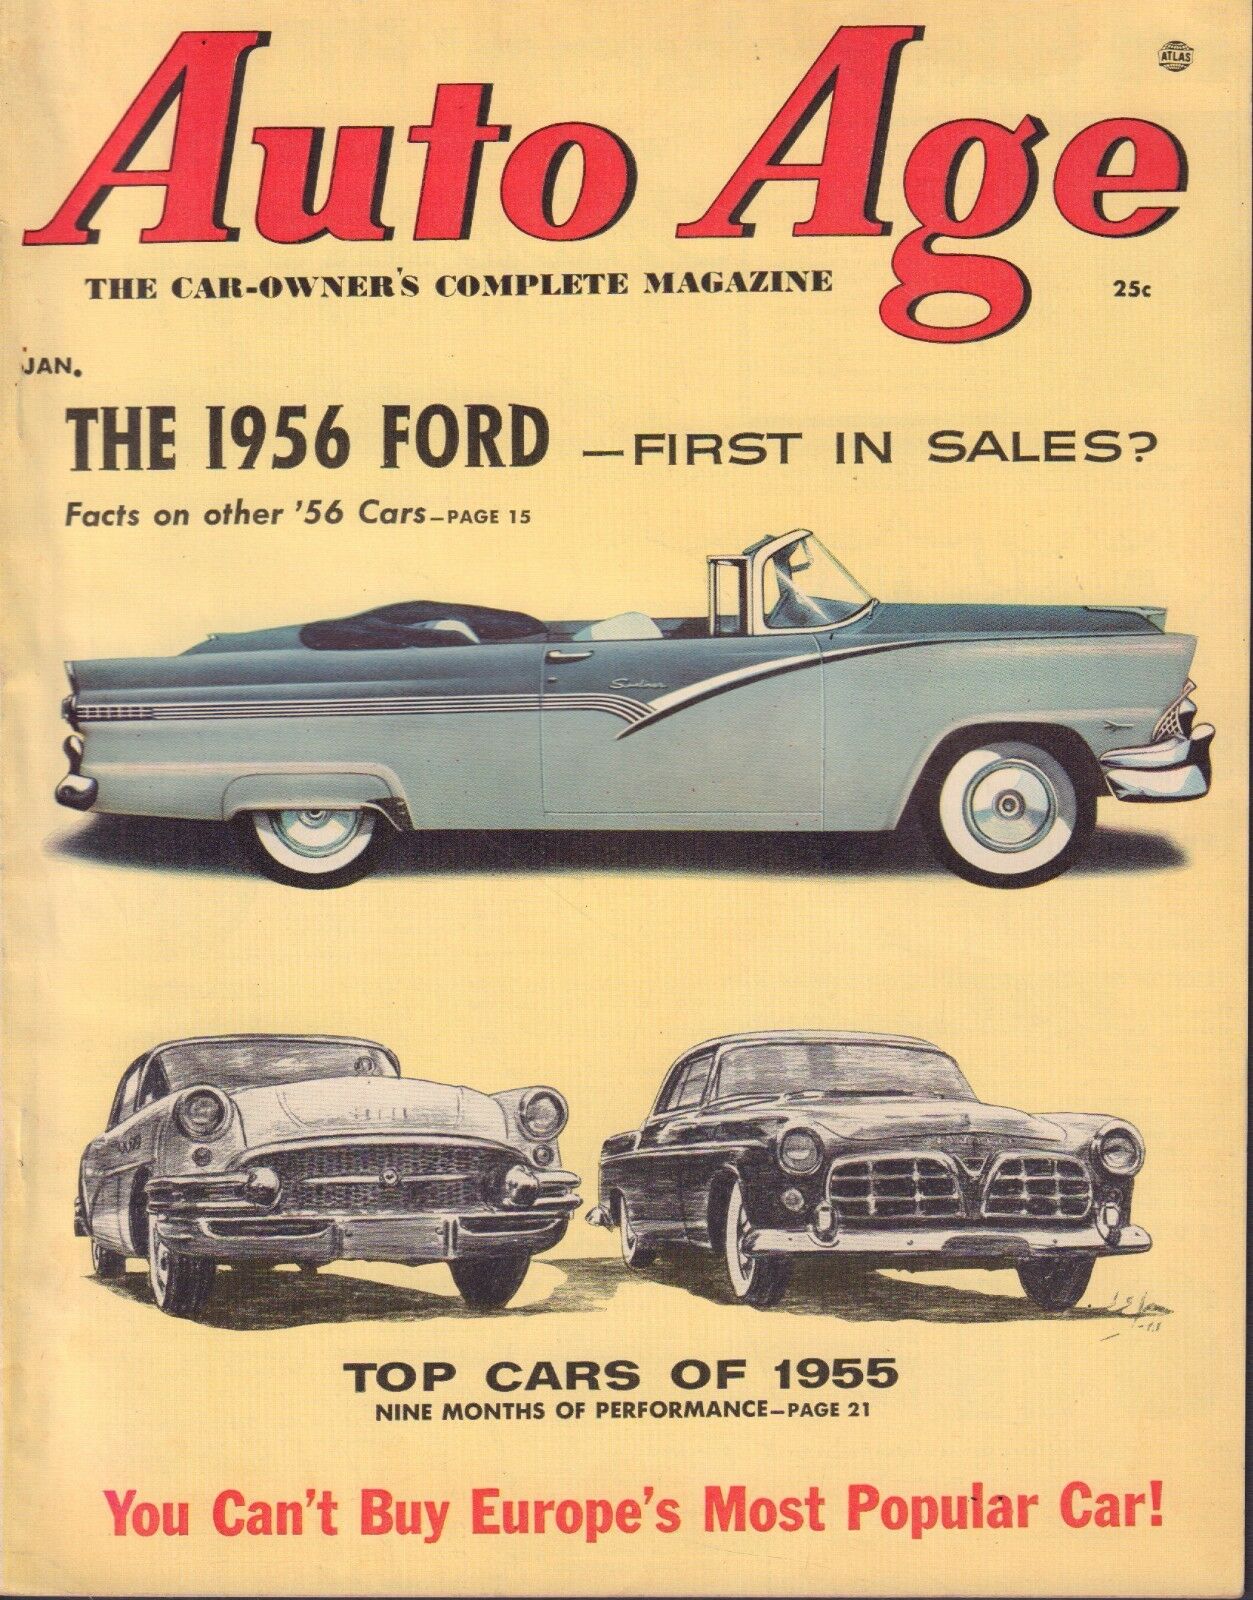 Auto Age January 1956 magazine back issue Auto Age magizine back copy Auto Age January 1956 Car Owners Complete Magazine Vintage Back Issue Published by Motorsport Publishing. The Car-Owner's Complete Magazine.